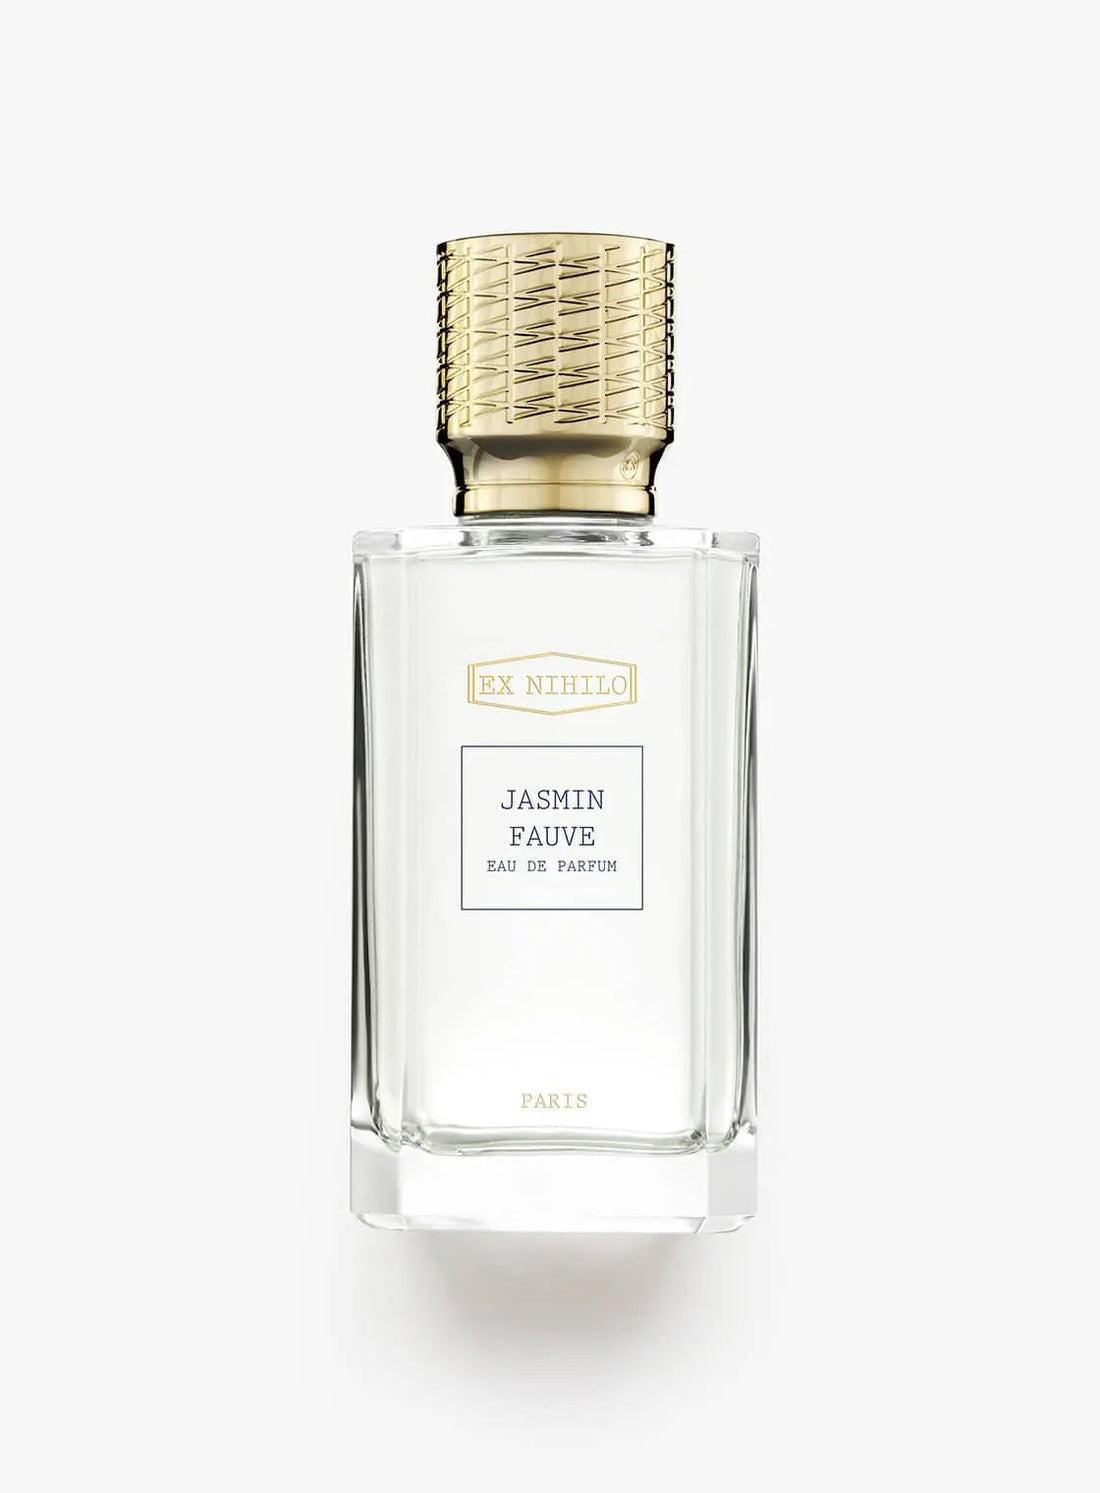 Ex nihilo Jasmin Fauve eau de parfum - 100 ml